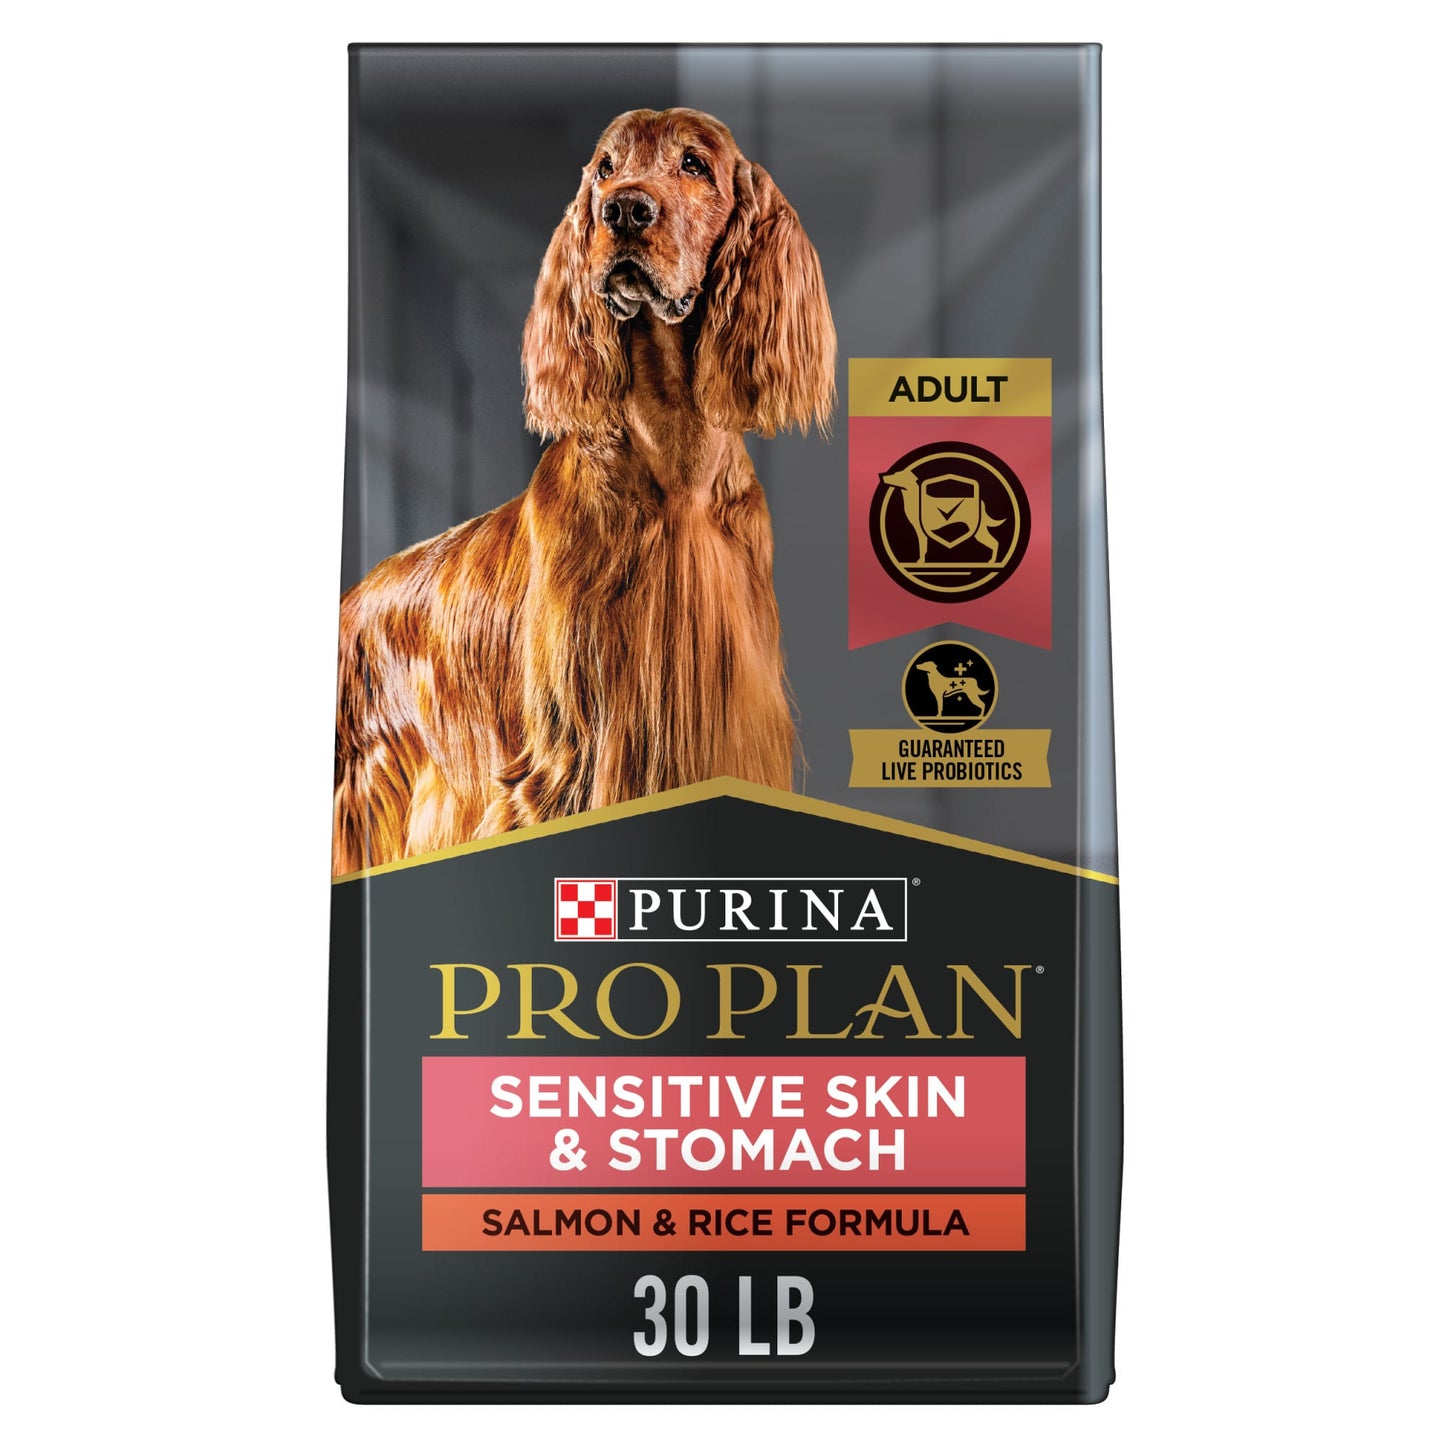 Purina Pro Plan Sensitive Skin Dog Food for Sensitive Stomachs, Salmon and Rice Formula - 30 lb. Bag